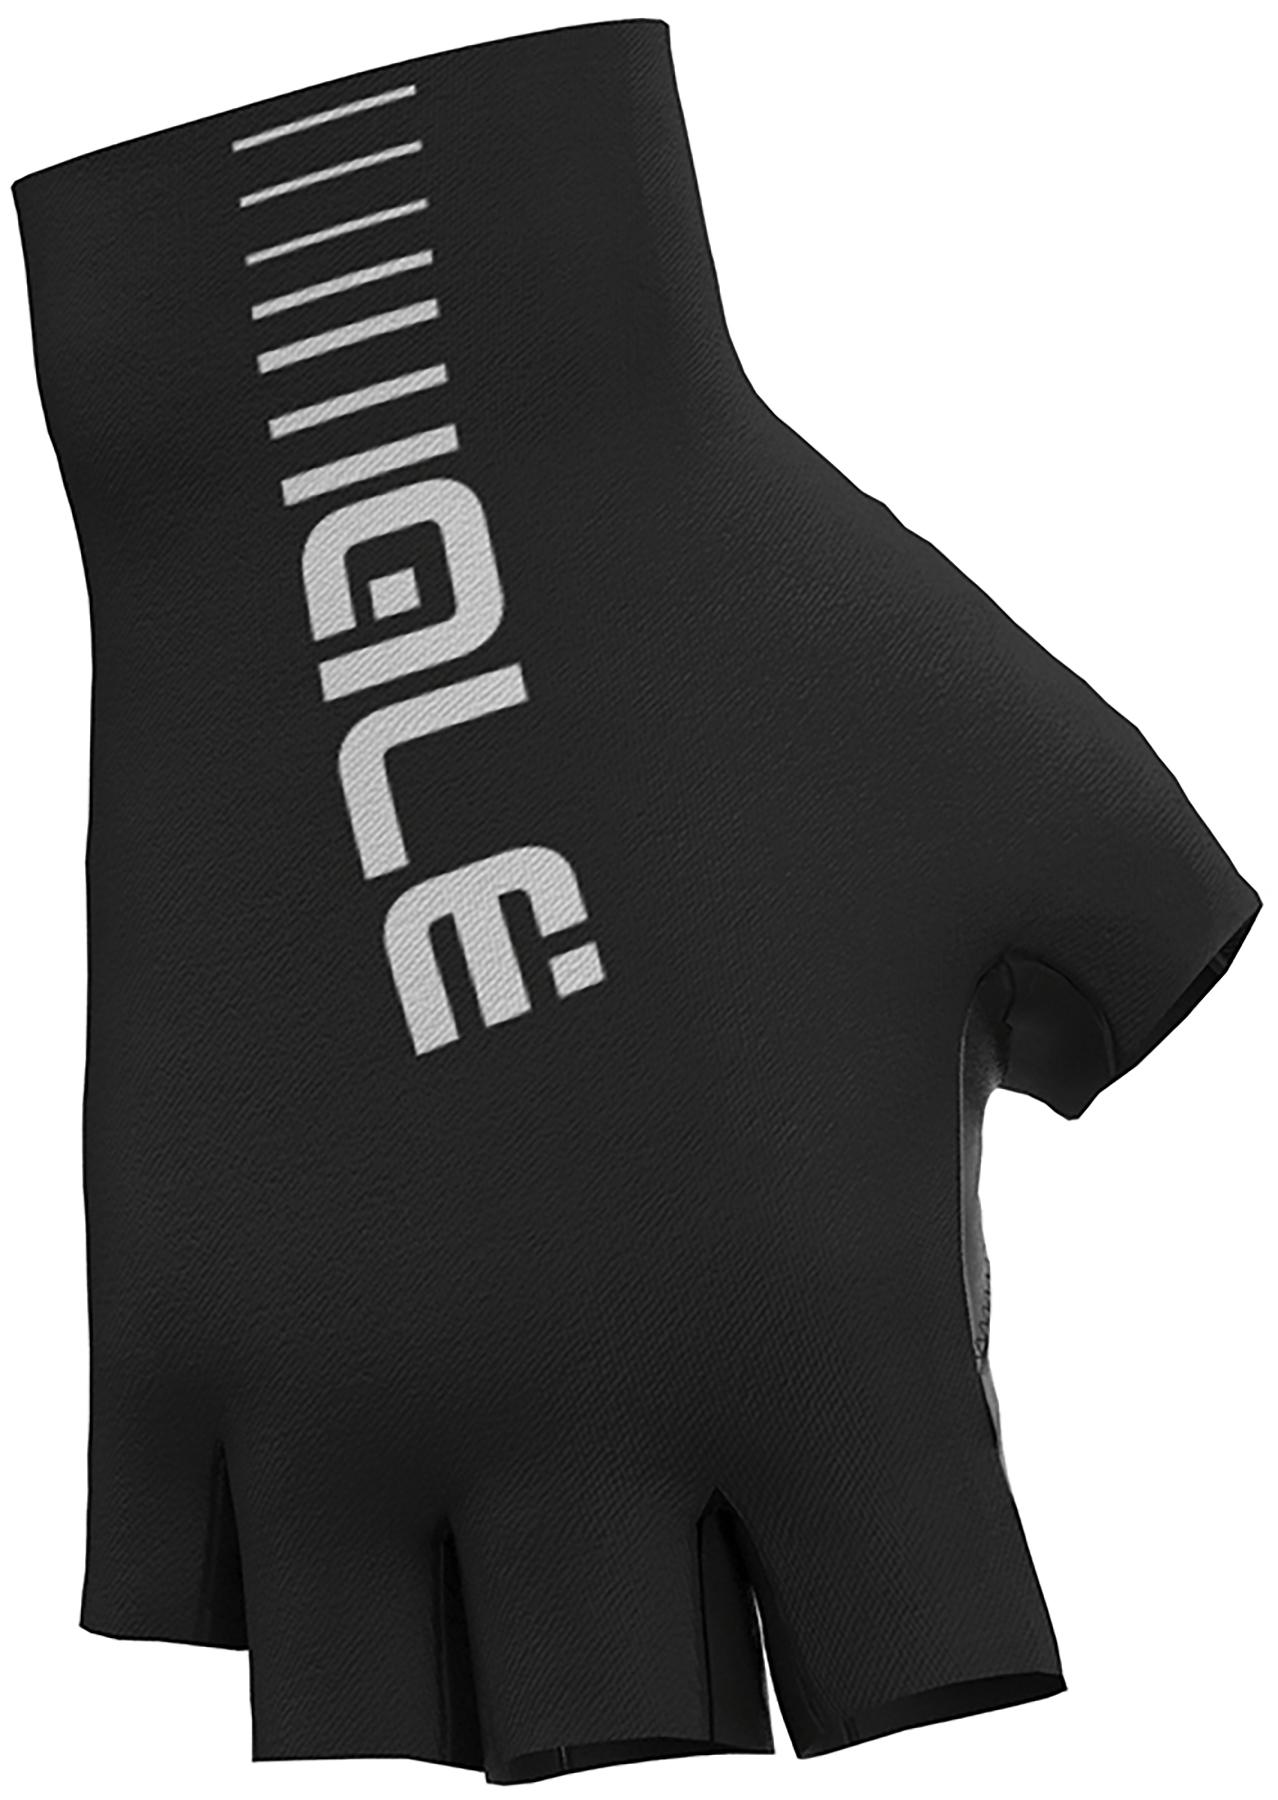 Al Sunselect Crono Gloves - Black/white